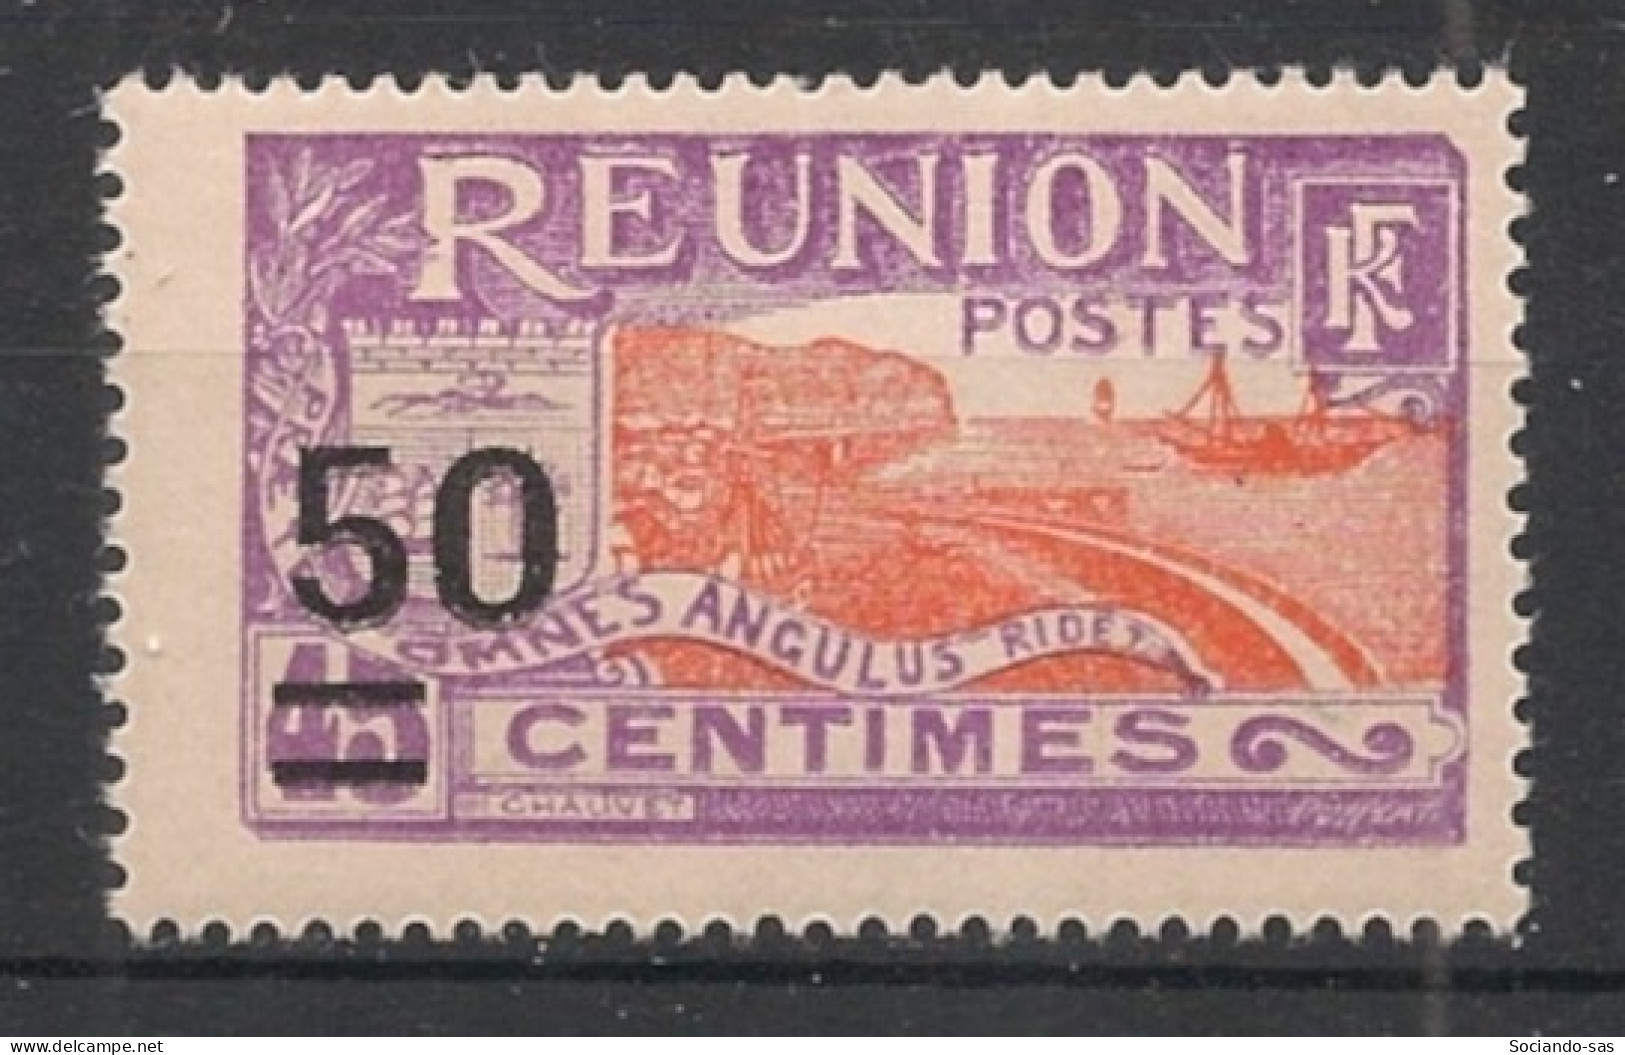 REUNION - 1933 - N°YT. 123A - Sainte-Rose 50 Sur 45c Violet - Signé BRUN - Neuf Luxe ** / MNH - Nuovi